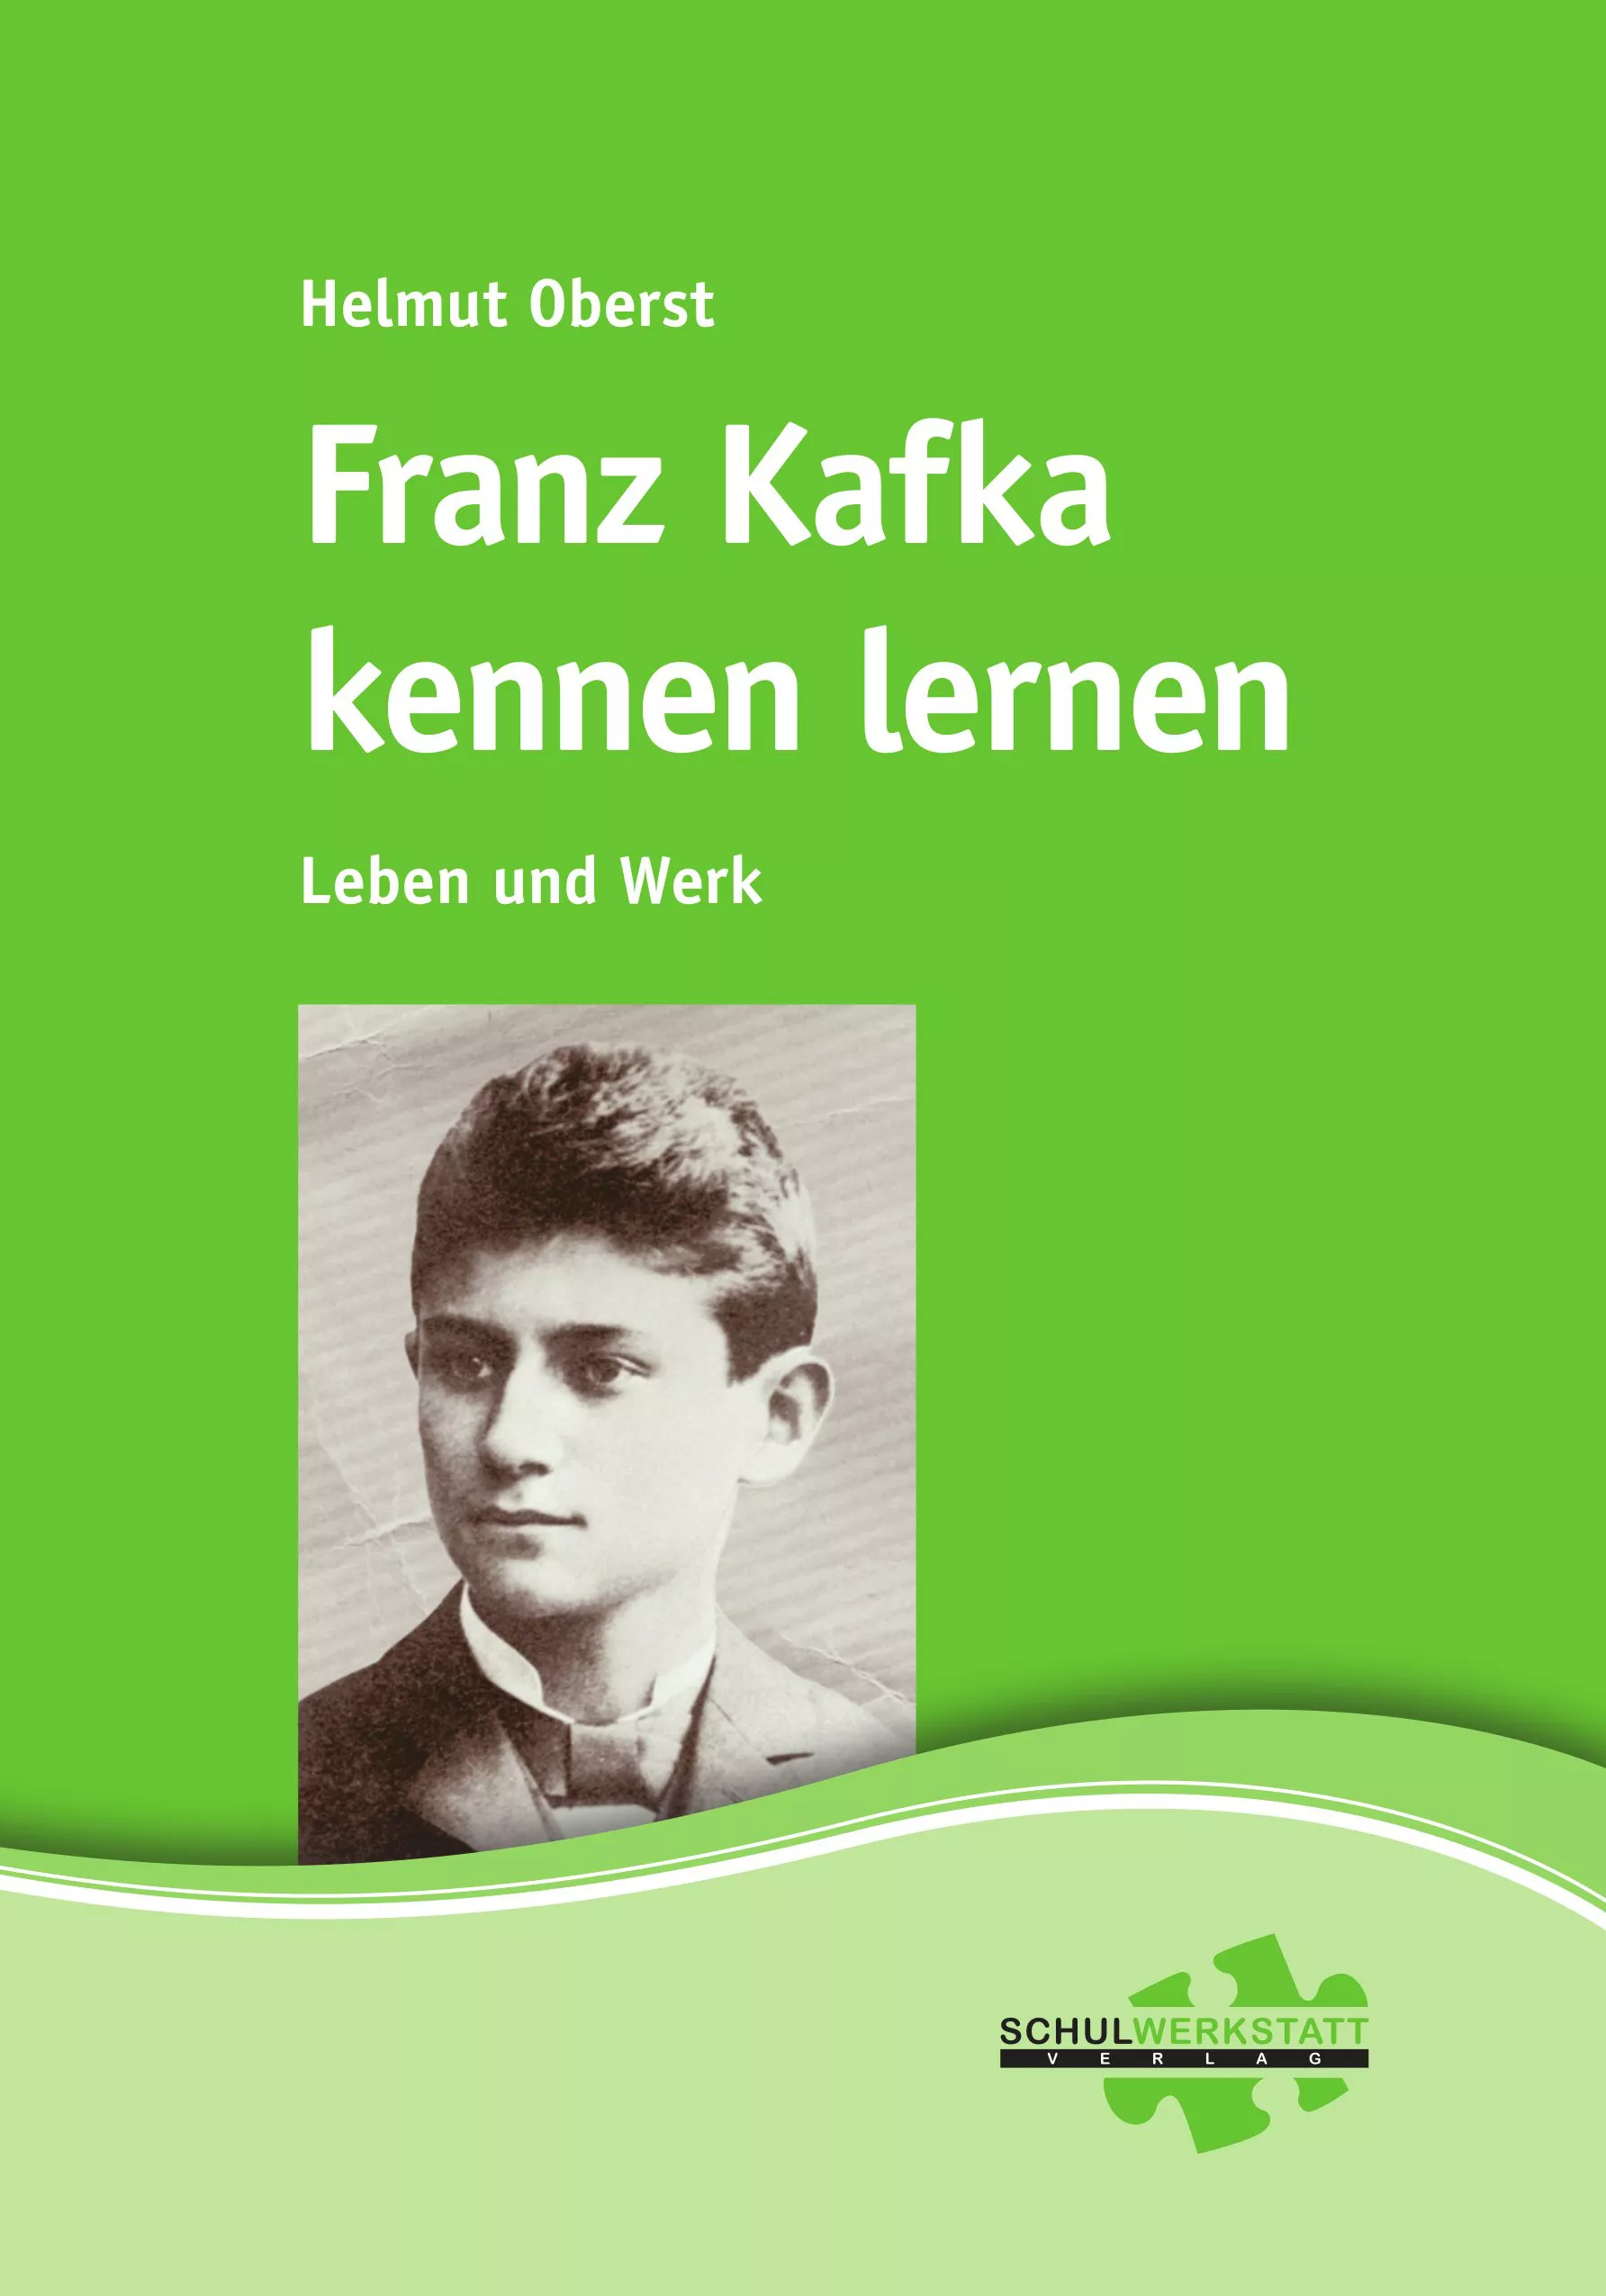 Franz Kafka kennen lernen